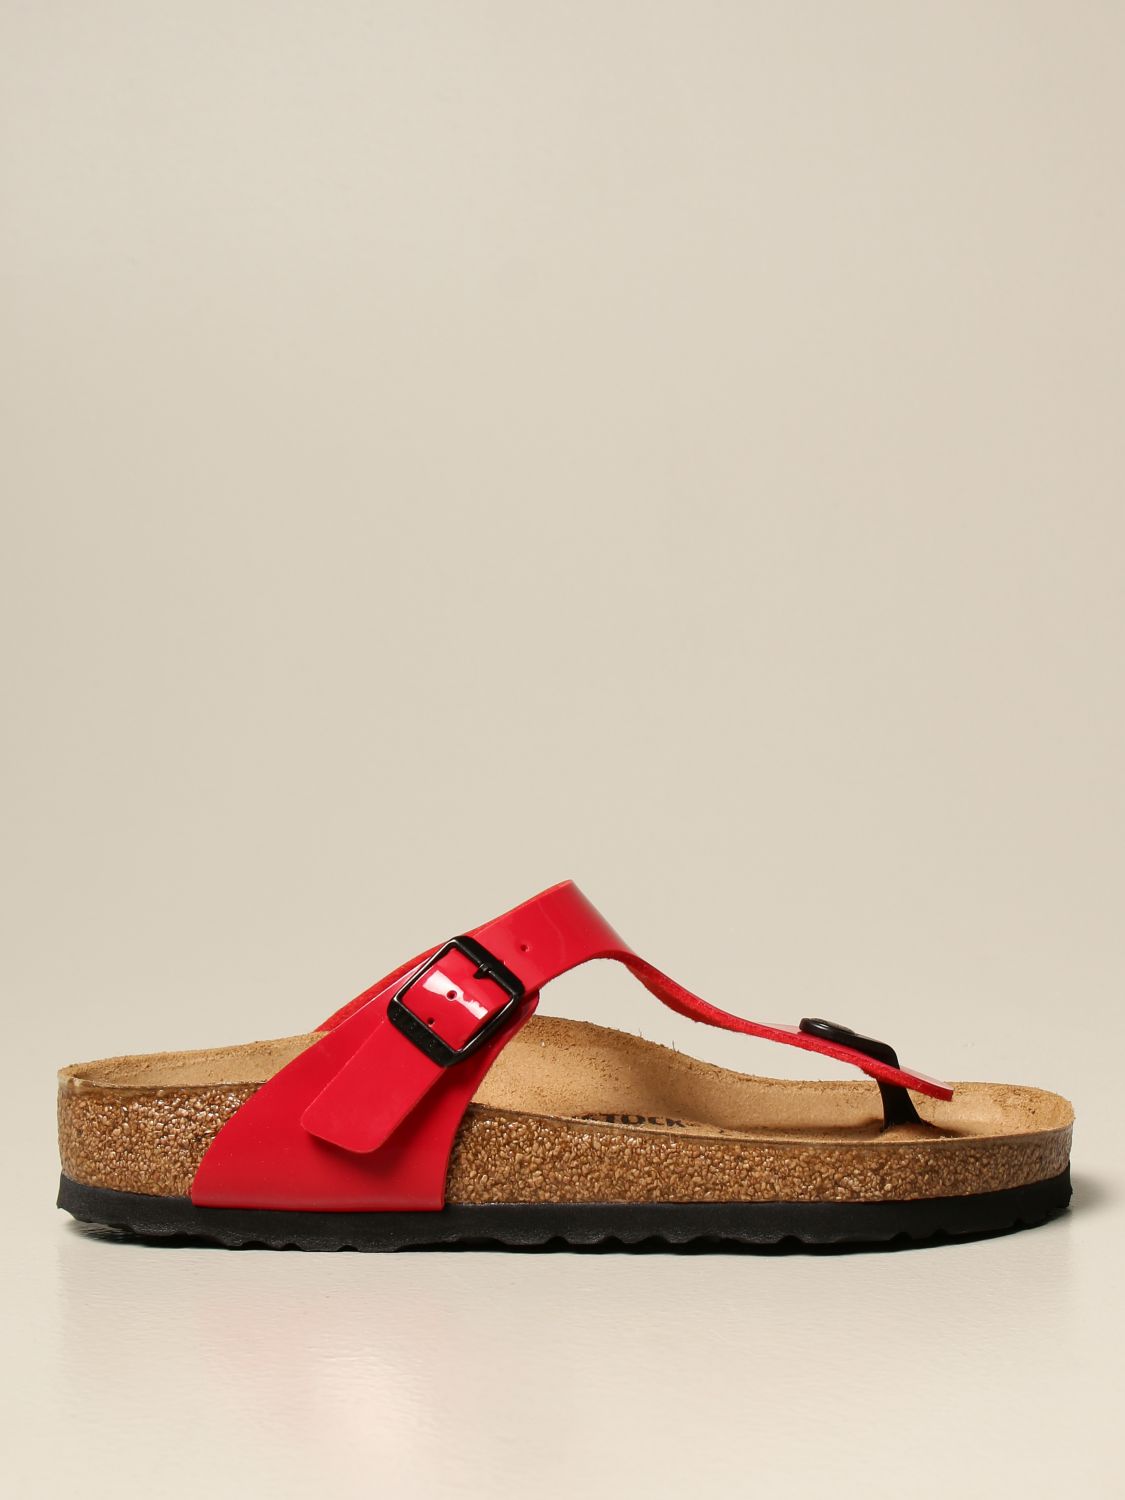 red gizeh birkenstock sandals